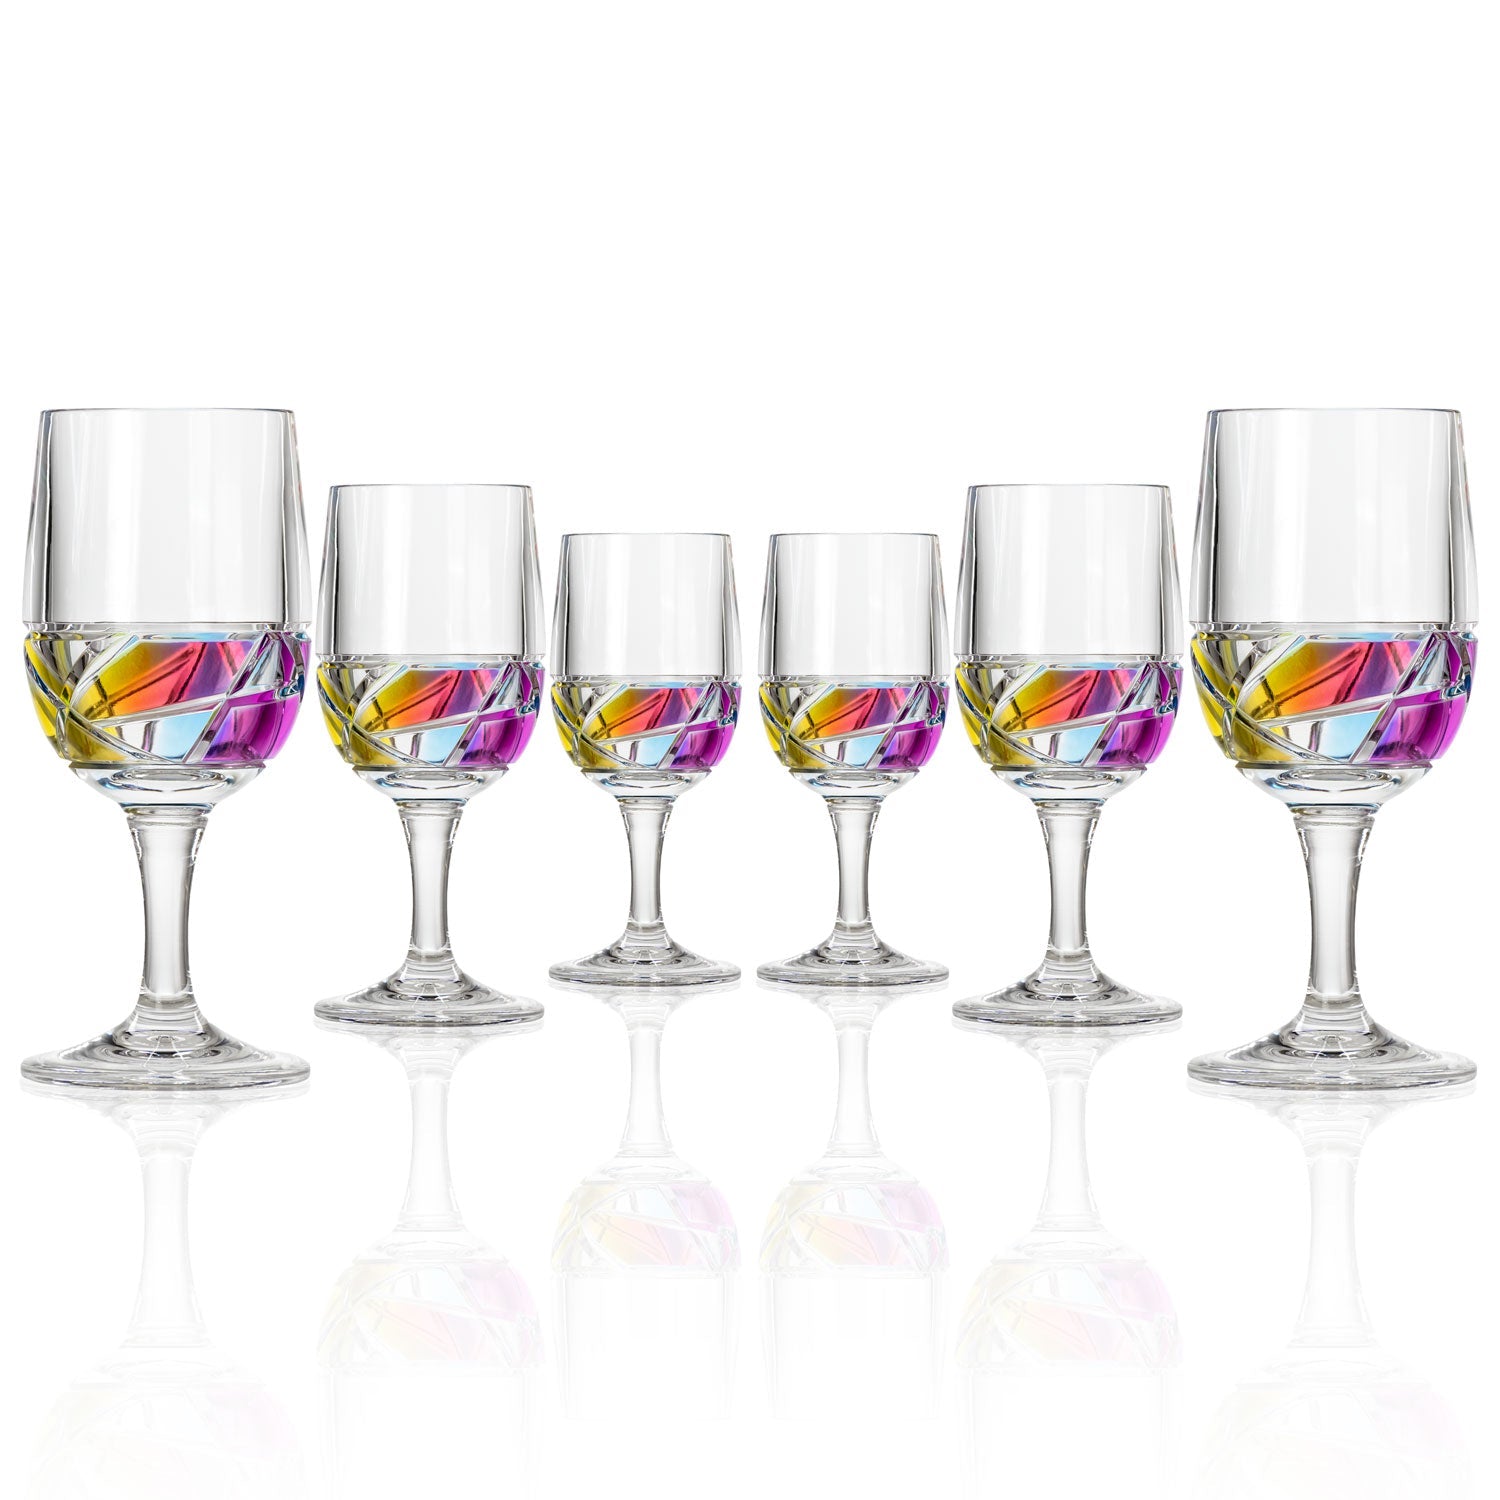 Merritt Designs 10oz Mosaic Rainbow Acrylic Wine Glass